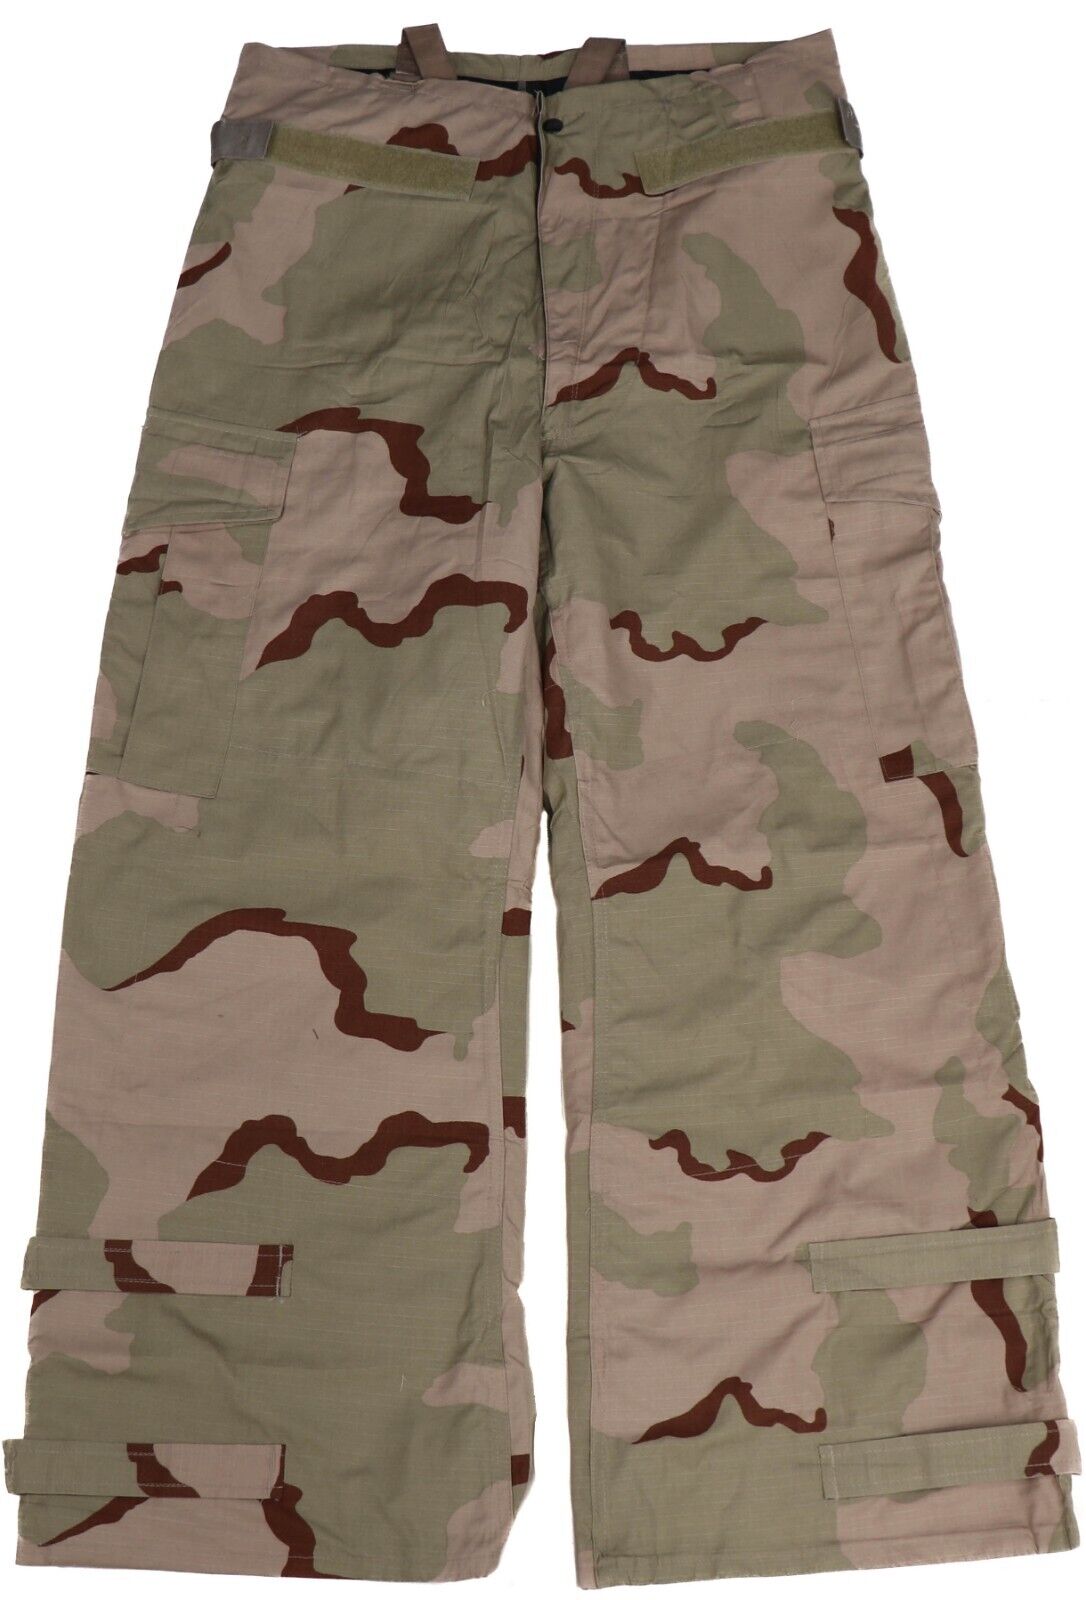 XLarge Reg - DCU Chemical Protective Pants W Suspenders Overgarment NFR JSLIST